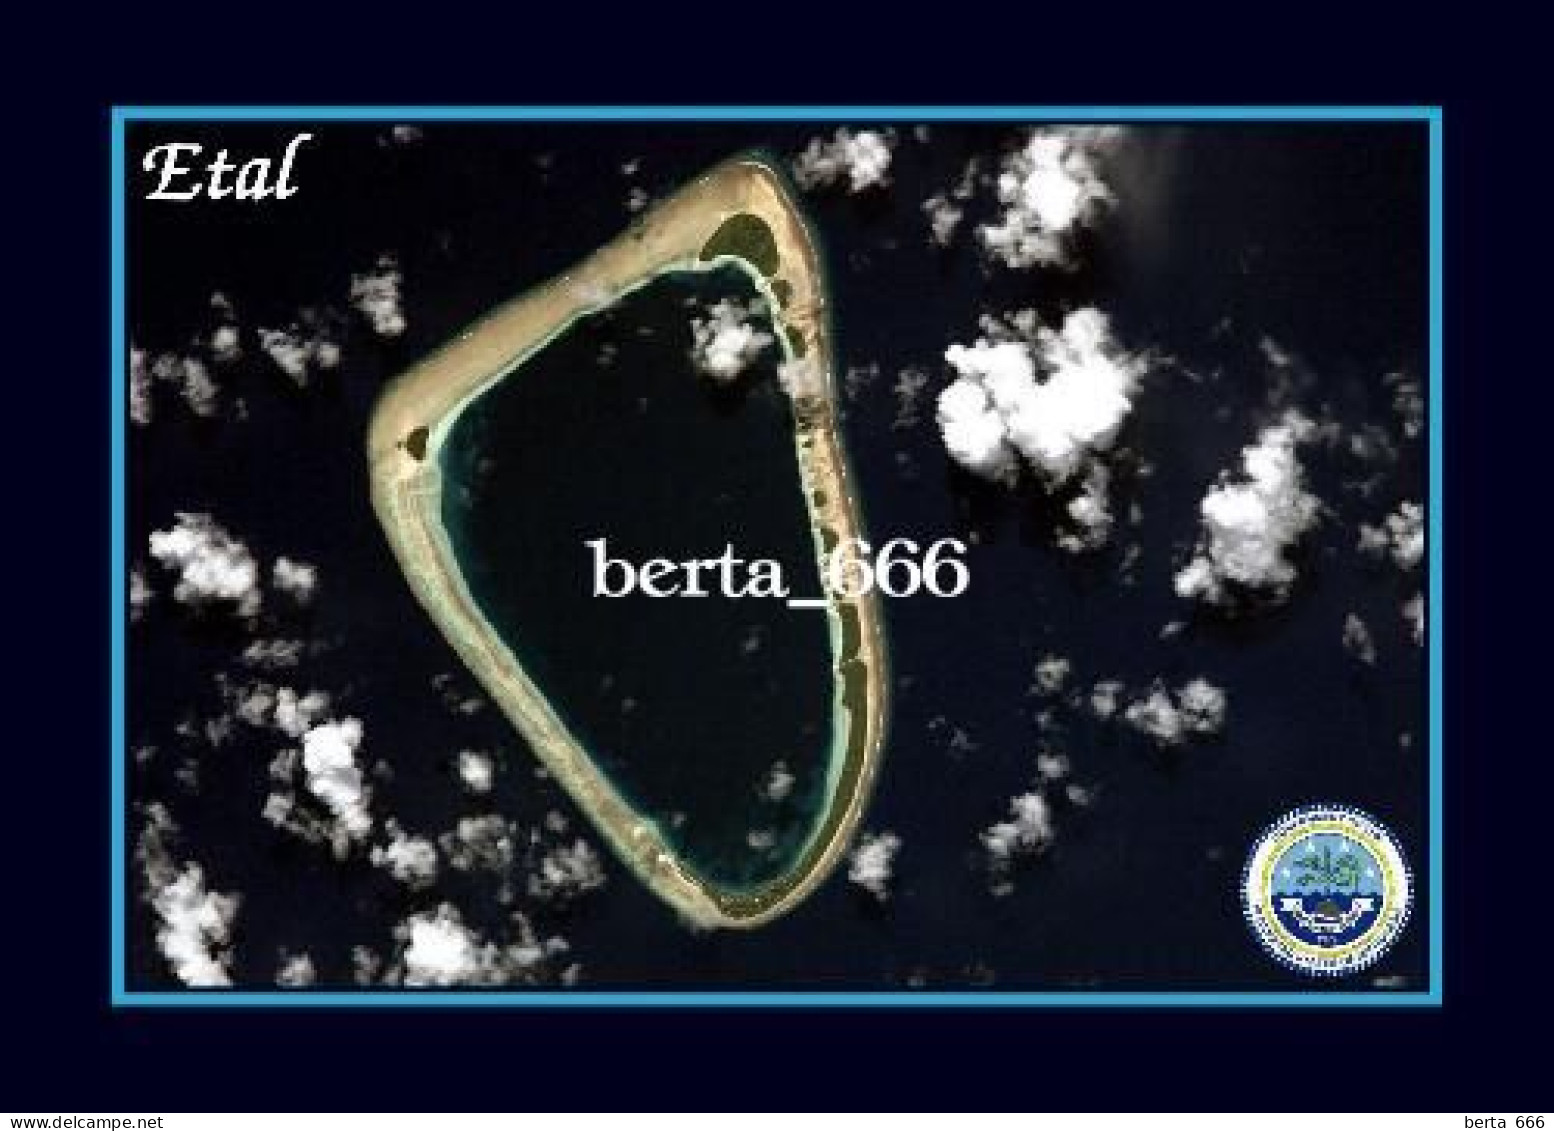 Micronesia Caroline Islands Etal Atoll New Postcard - Mikronesien